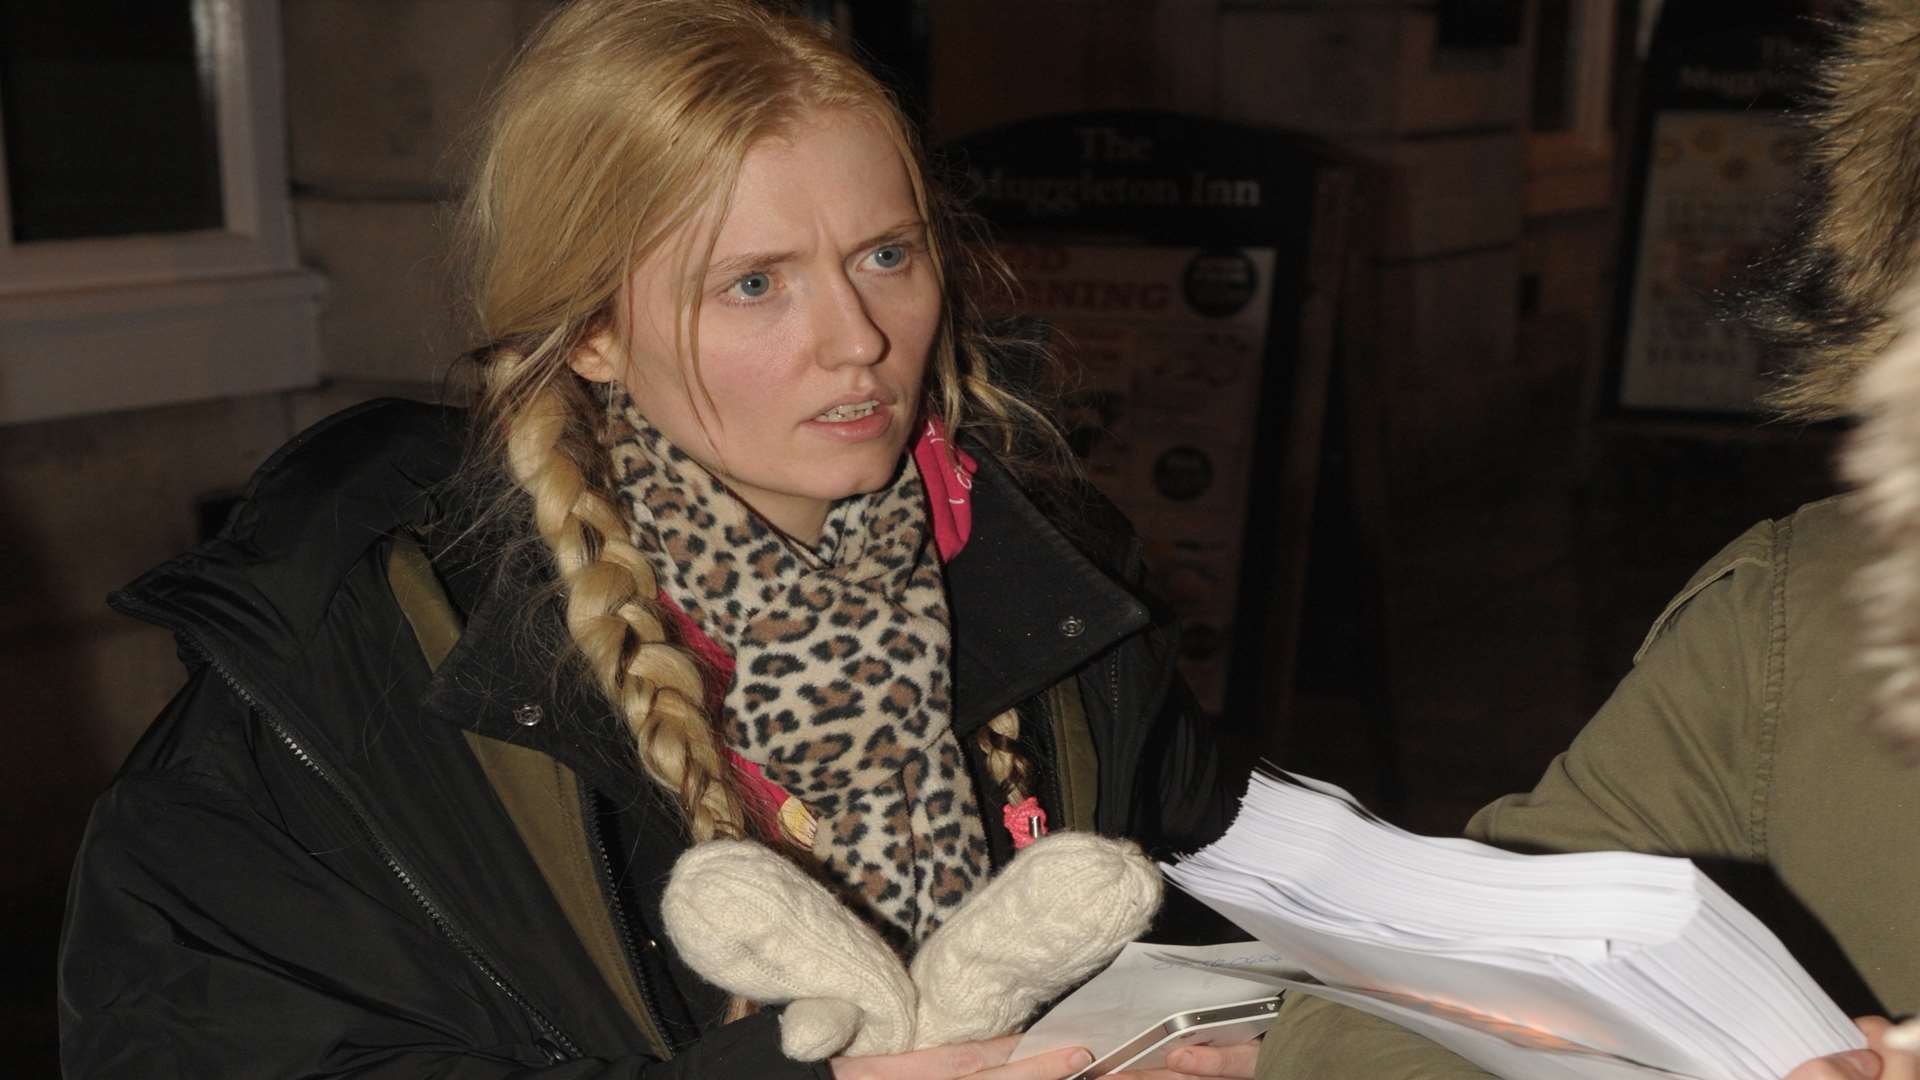 Patrick Lamb's girlfriend, Natasha Morgan, organised a late night search and leaflet distribution